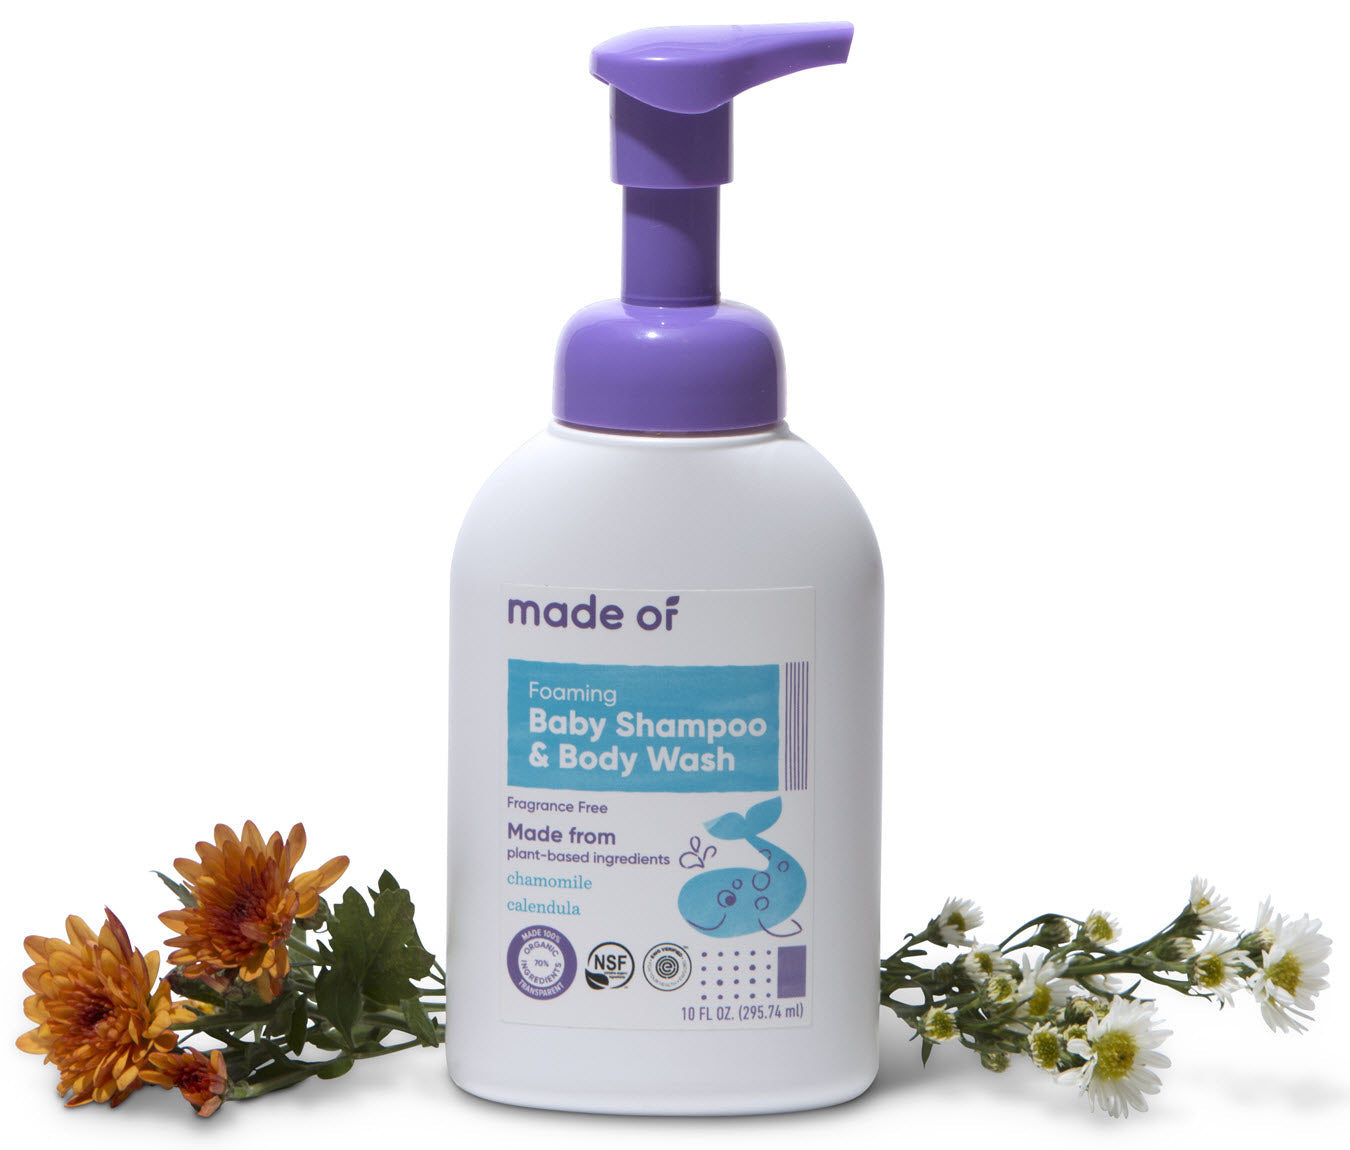 Smeren motor verachten Foaming Organic Baby Shampoo & Body Wash - MADE OF